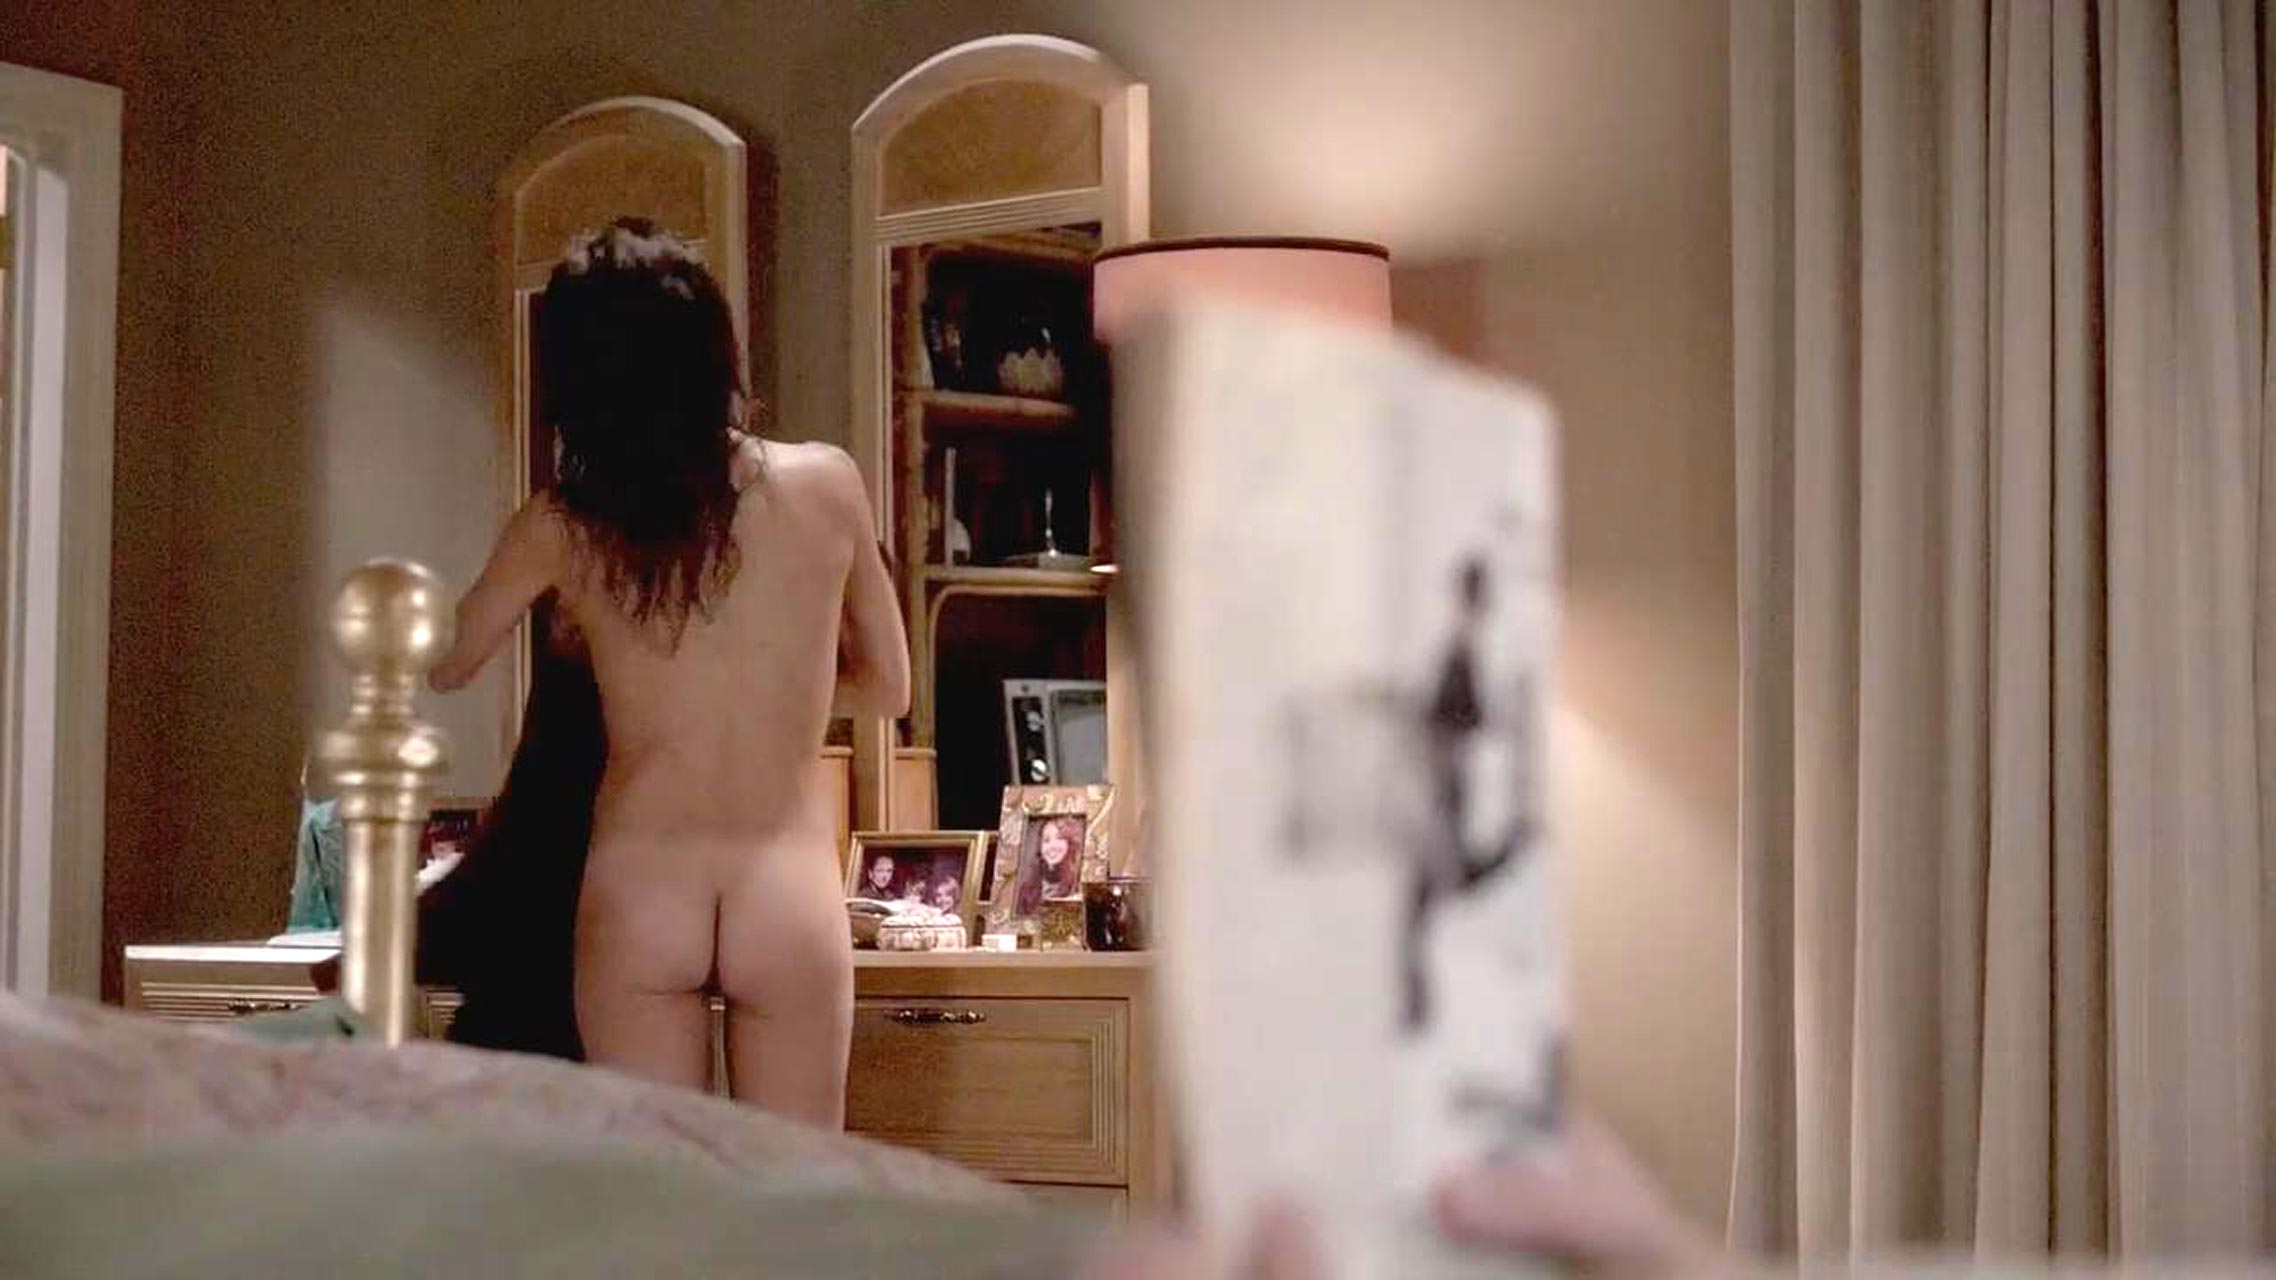 https://scandalplanet.com/wp-content/uploads/2017/03/[02-25]-Keri-Russell-nude-Naked-Topless.jpg